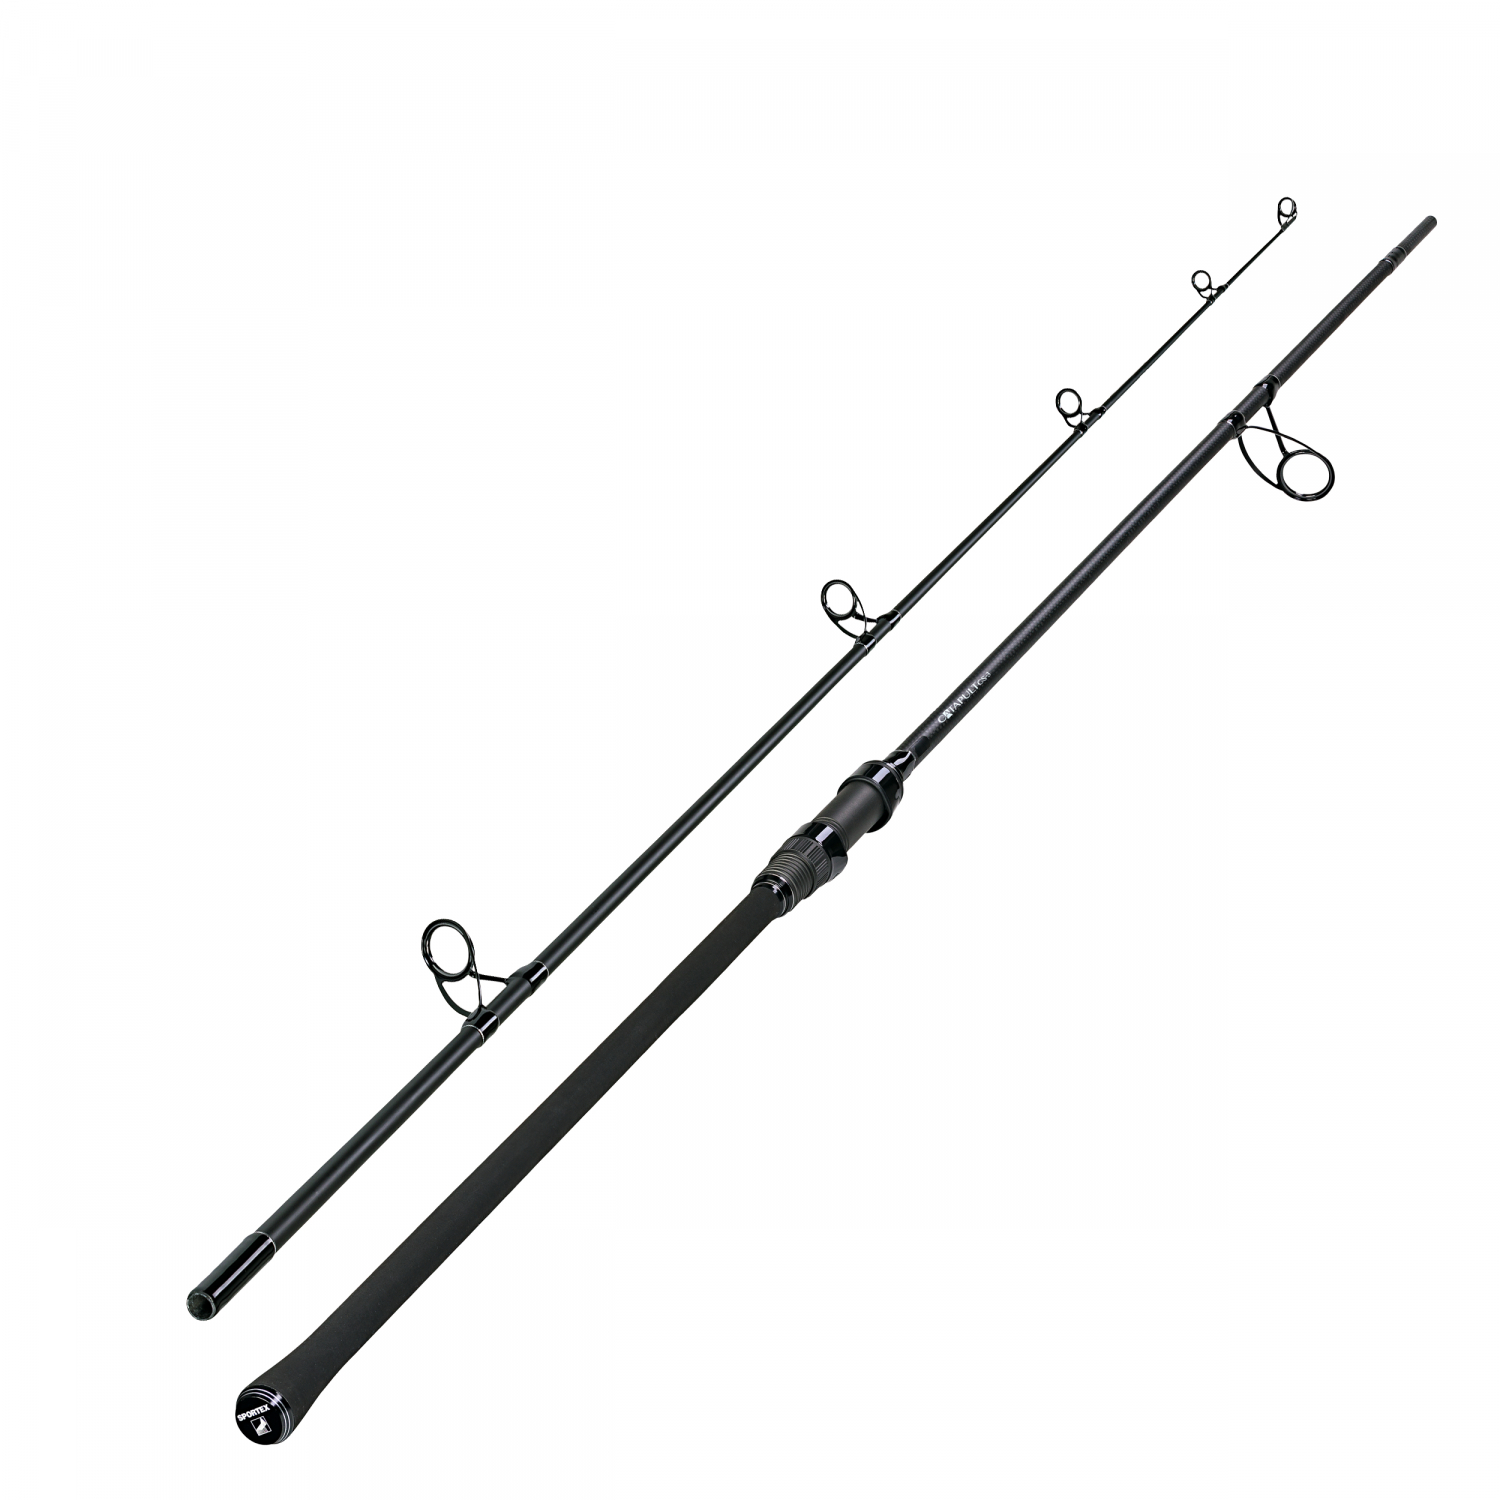 Sportex Carp Fishing Rod Catapult CS-3 at low prices